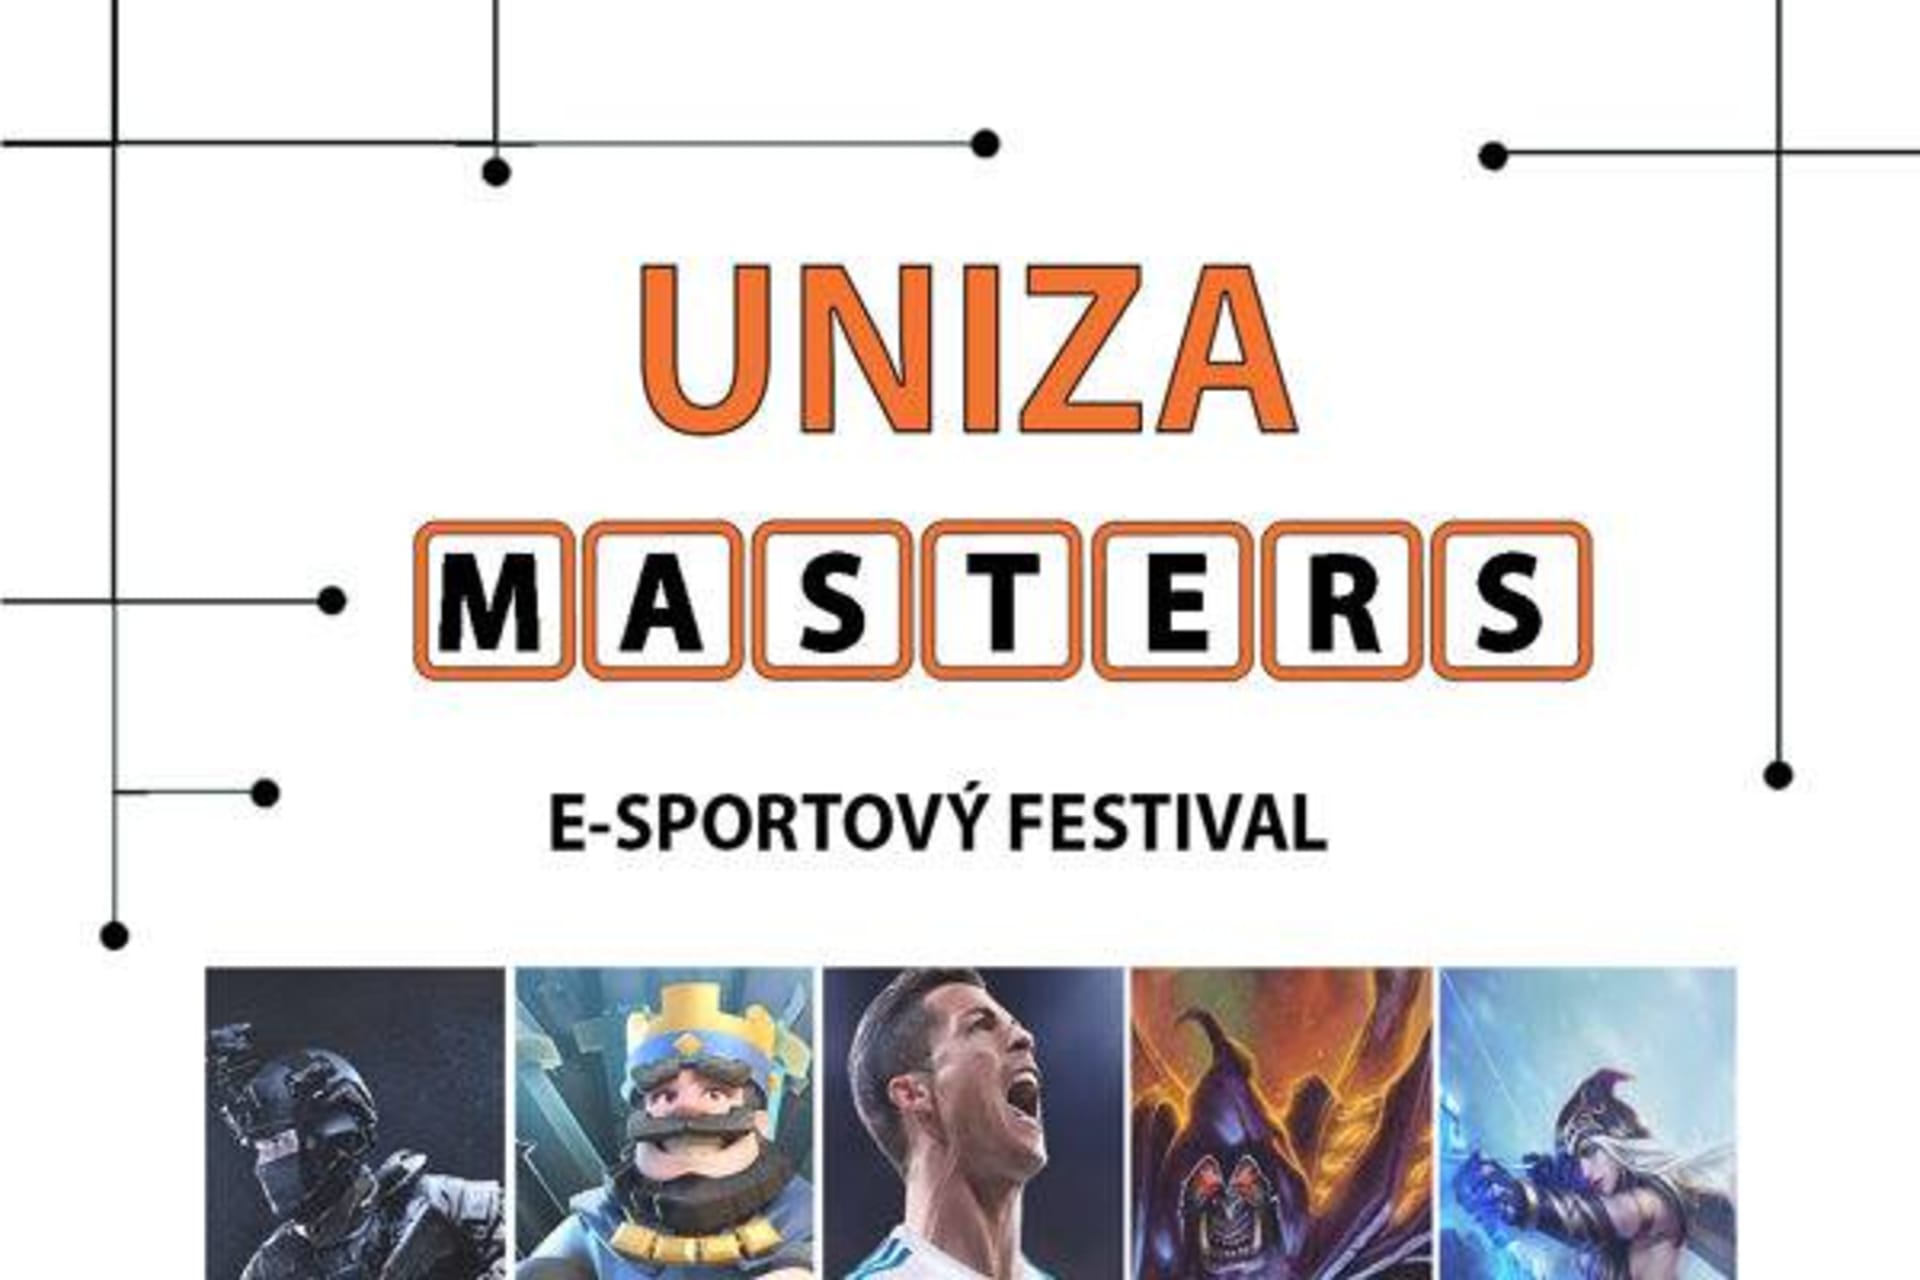 UNIZA Masters